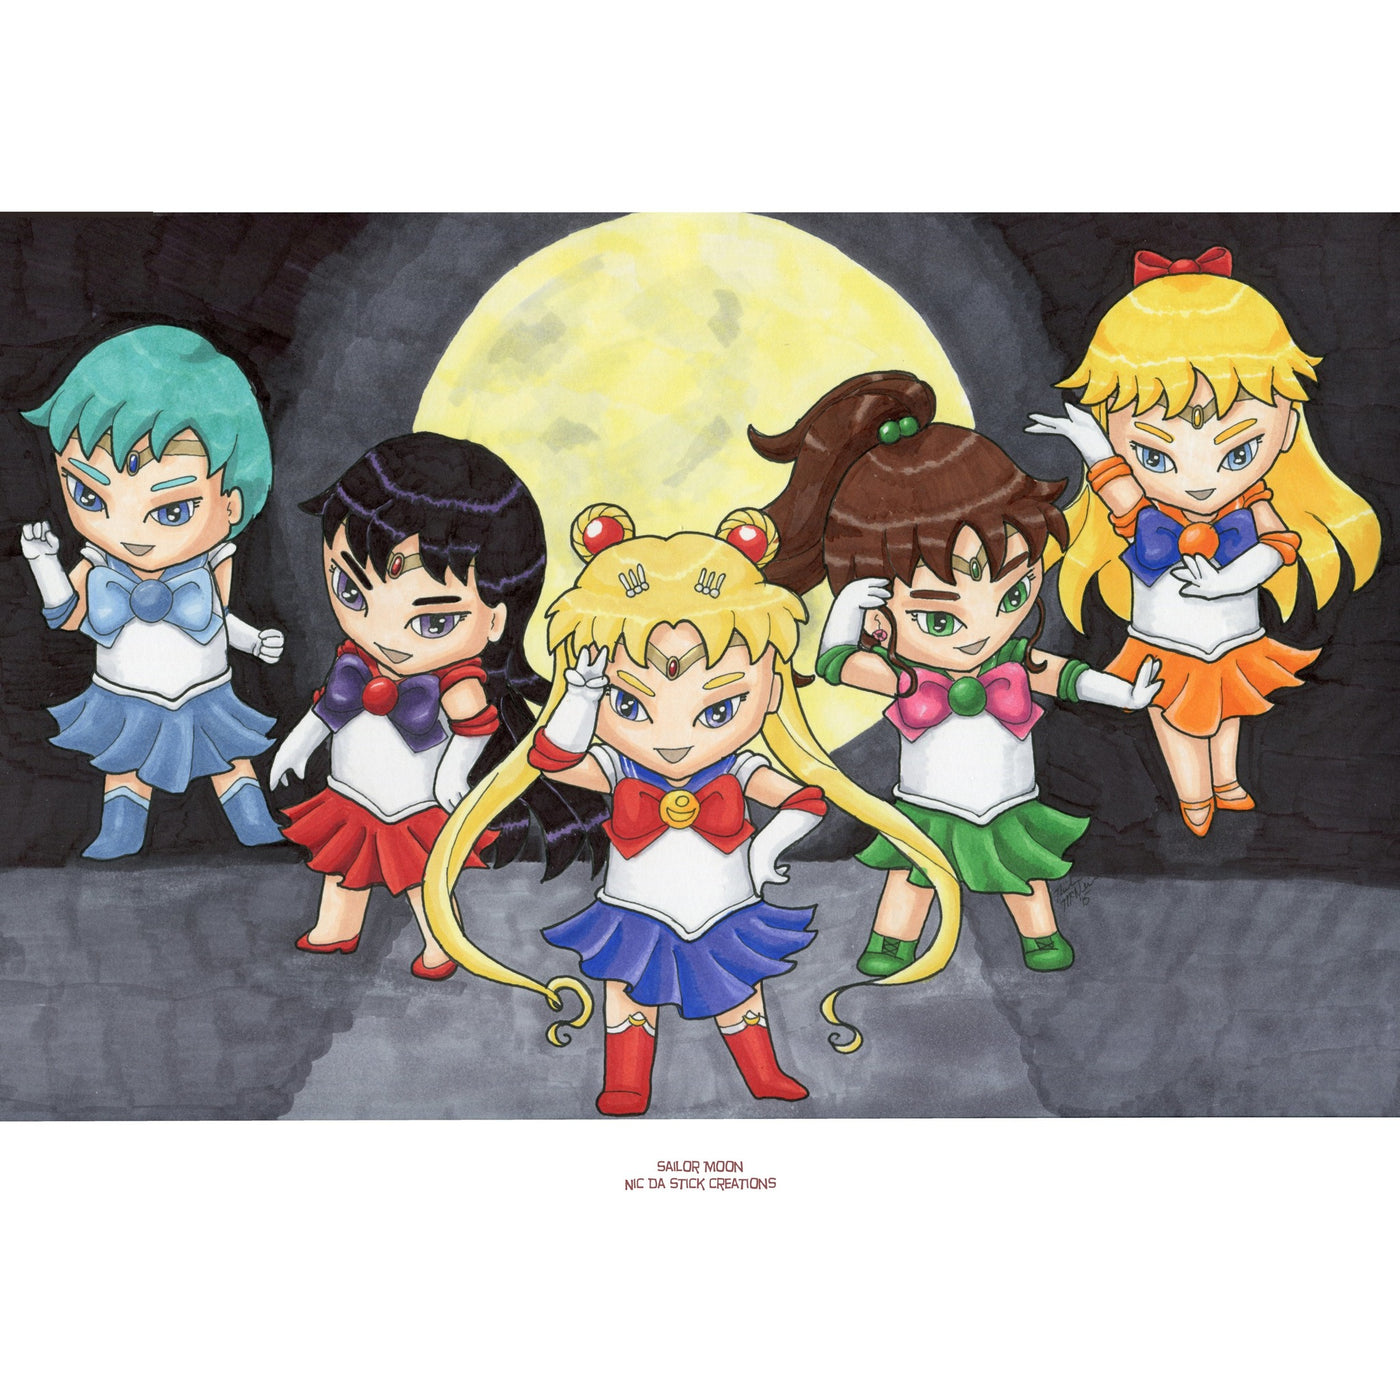 Sailor Moon Art Print,Prints - Nic Da Stick Creations